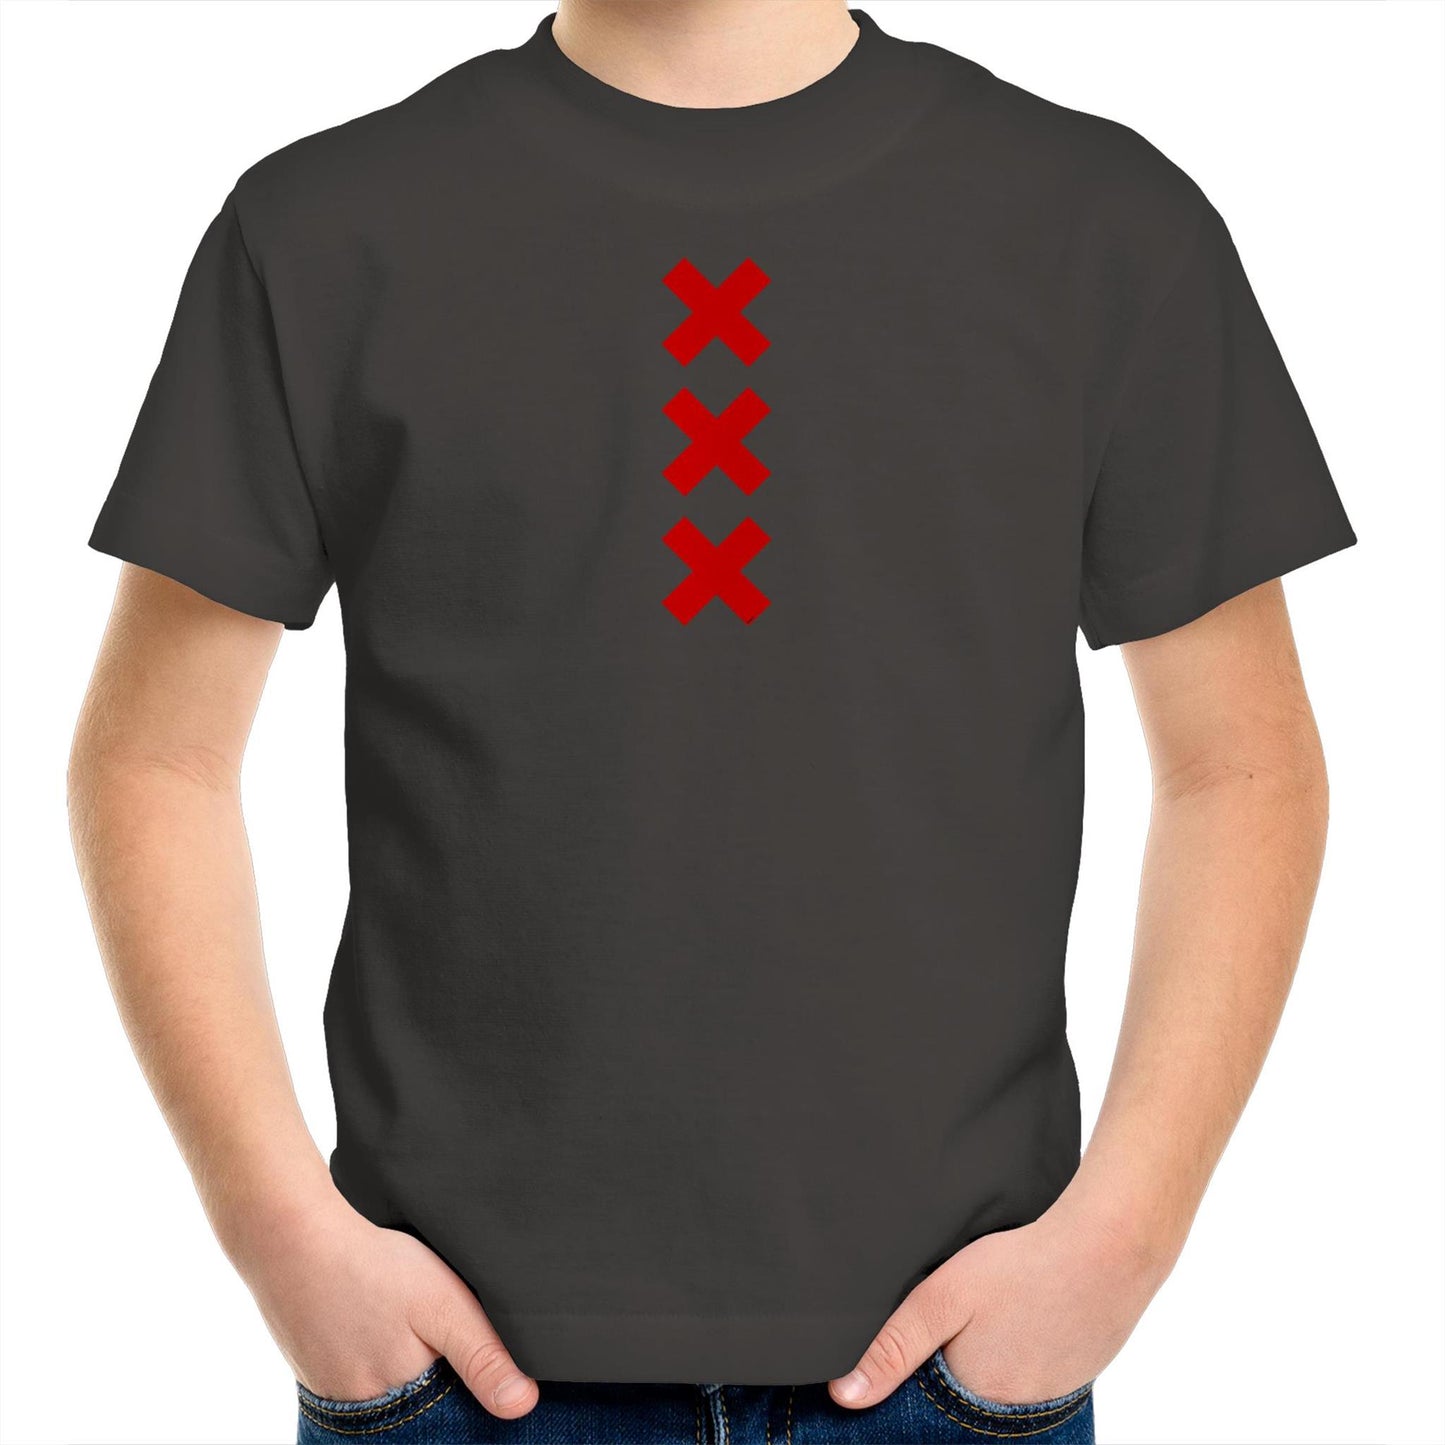 XXX T Shirts for Kids